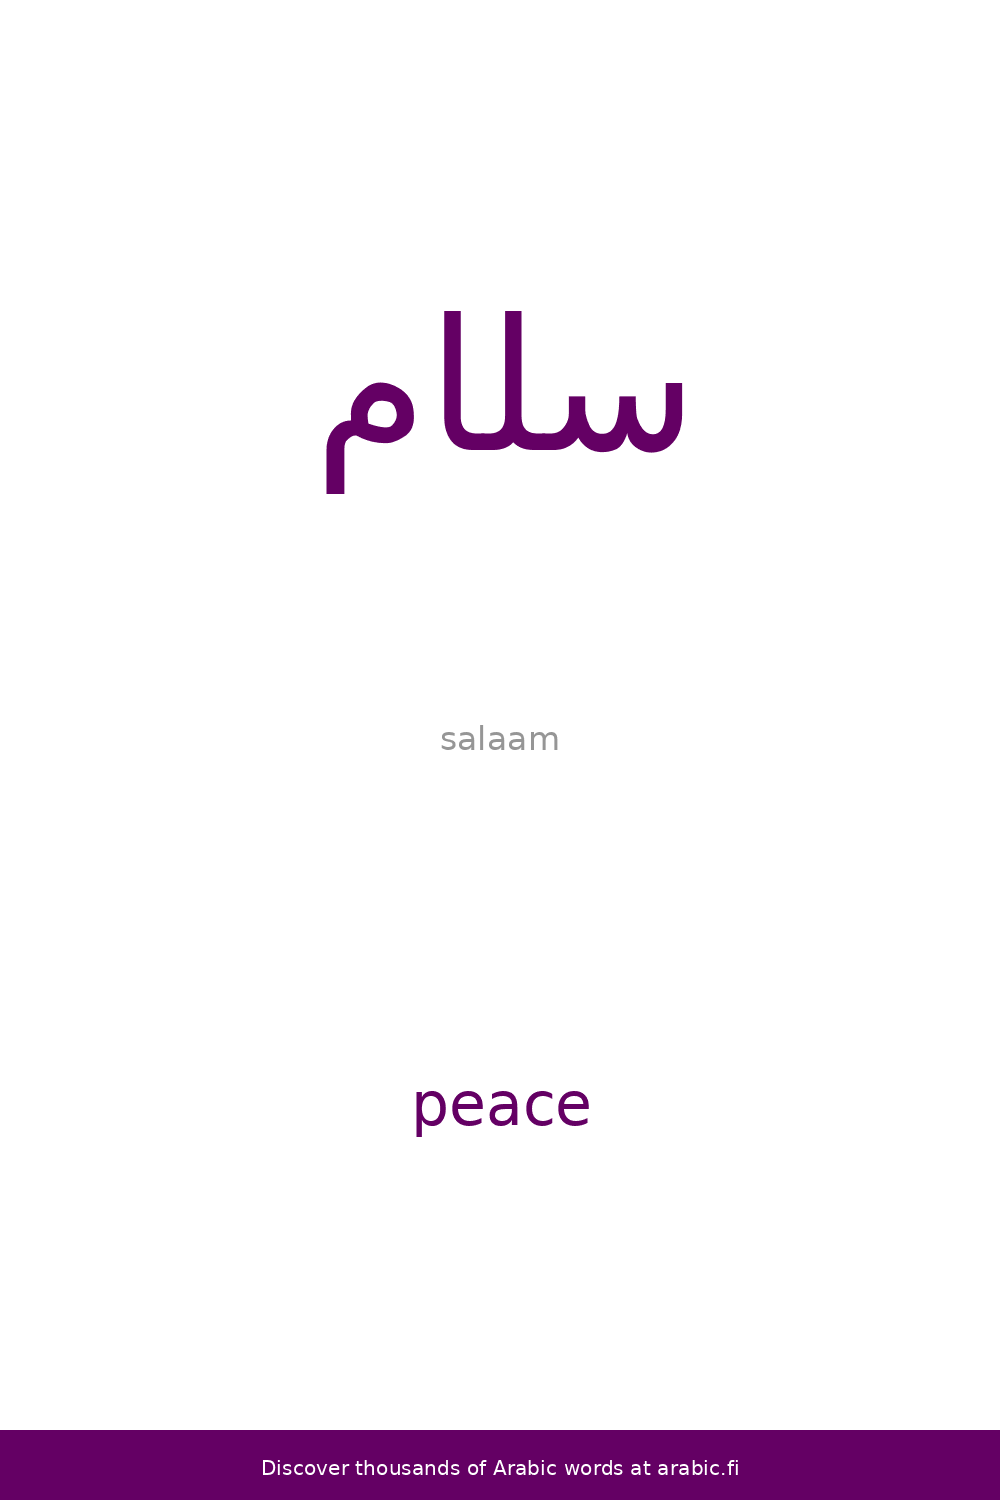 Peace – an Arabic word